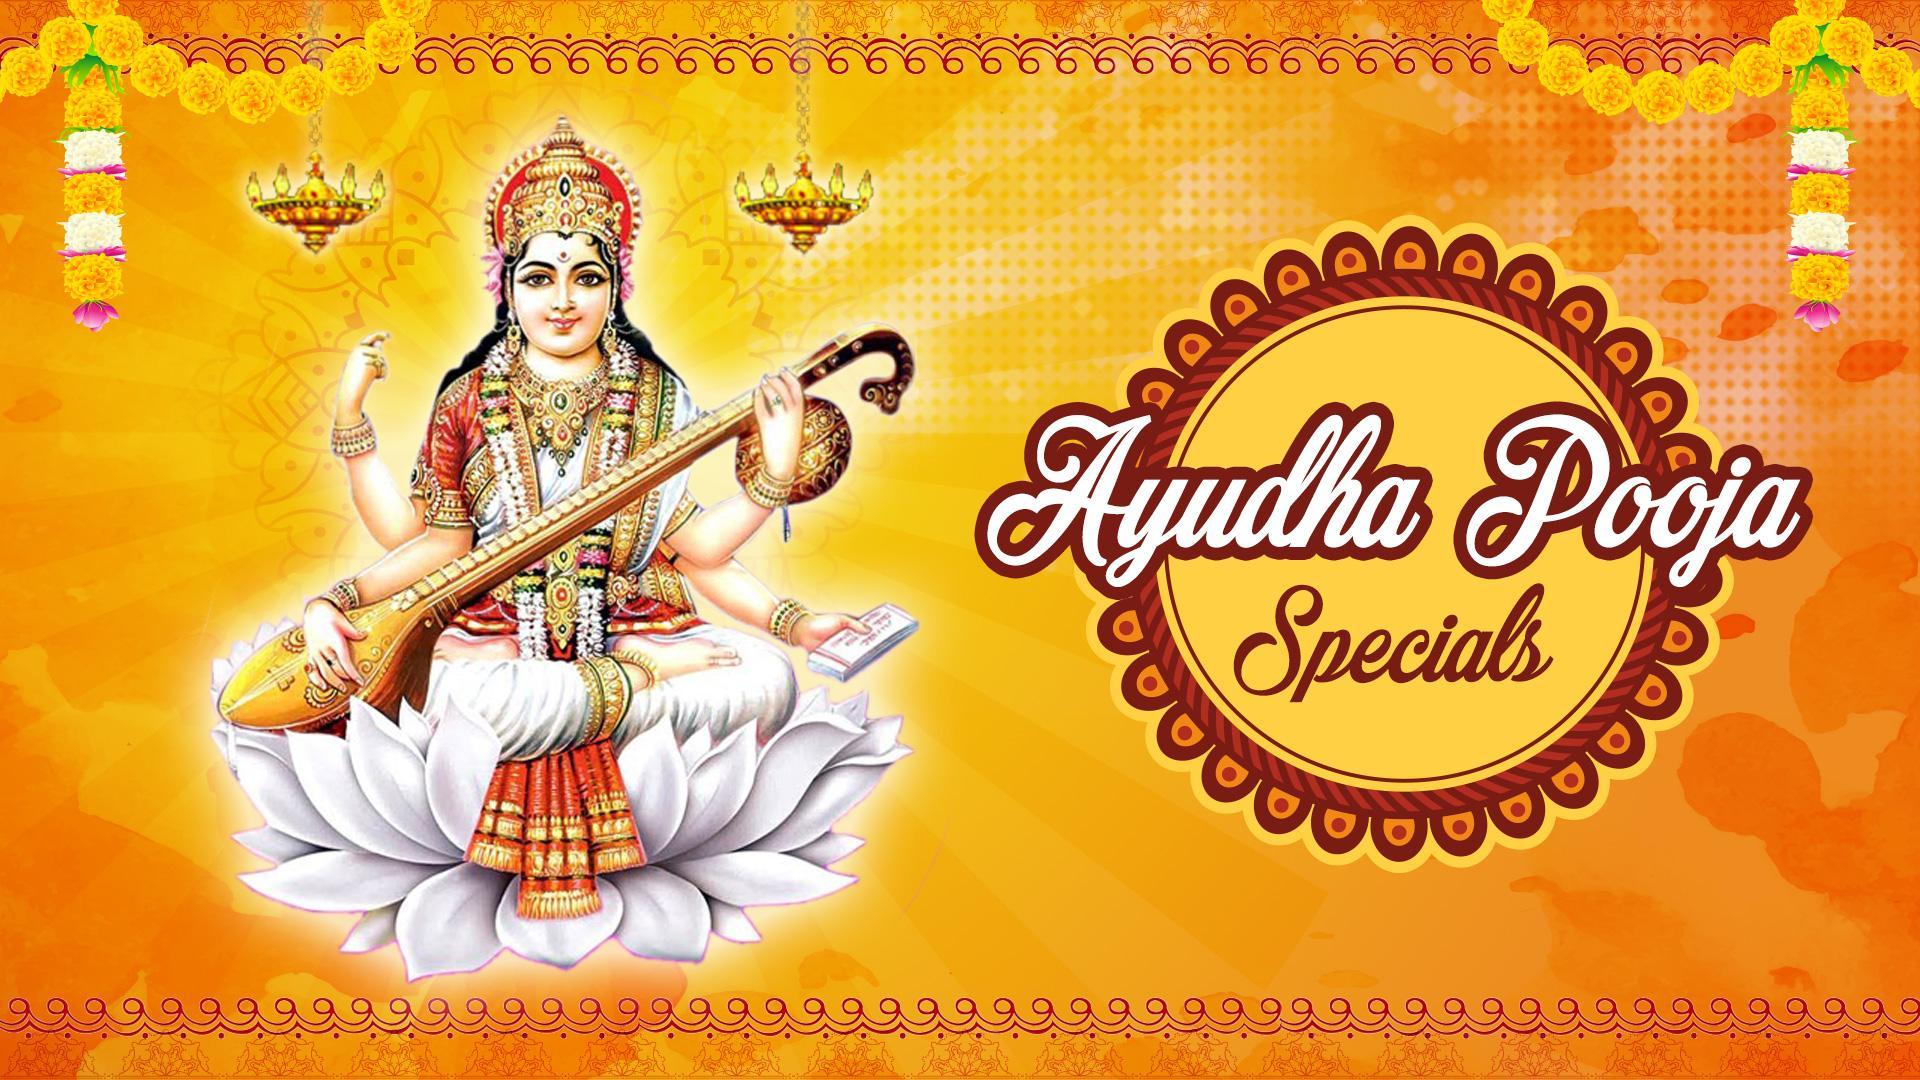 Ayudha pooja wishes